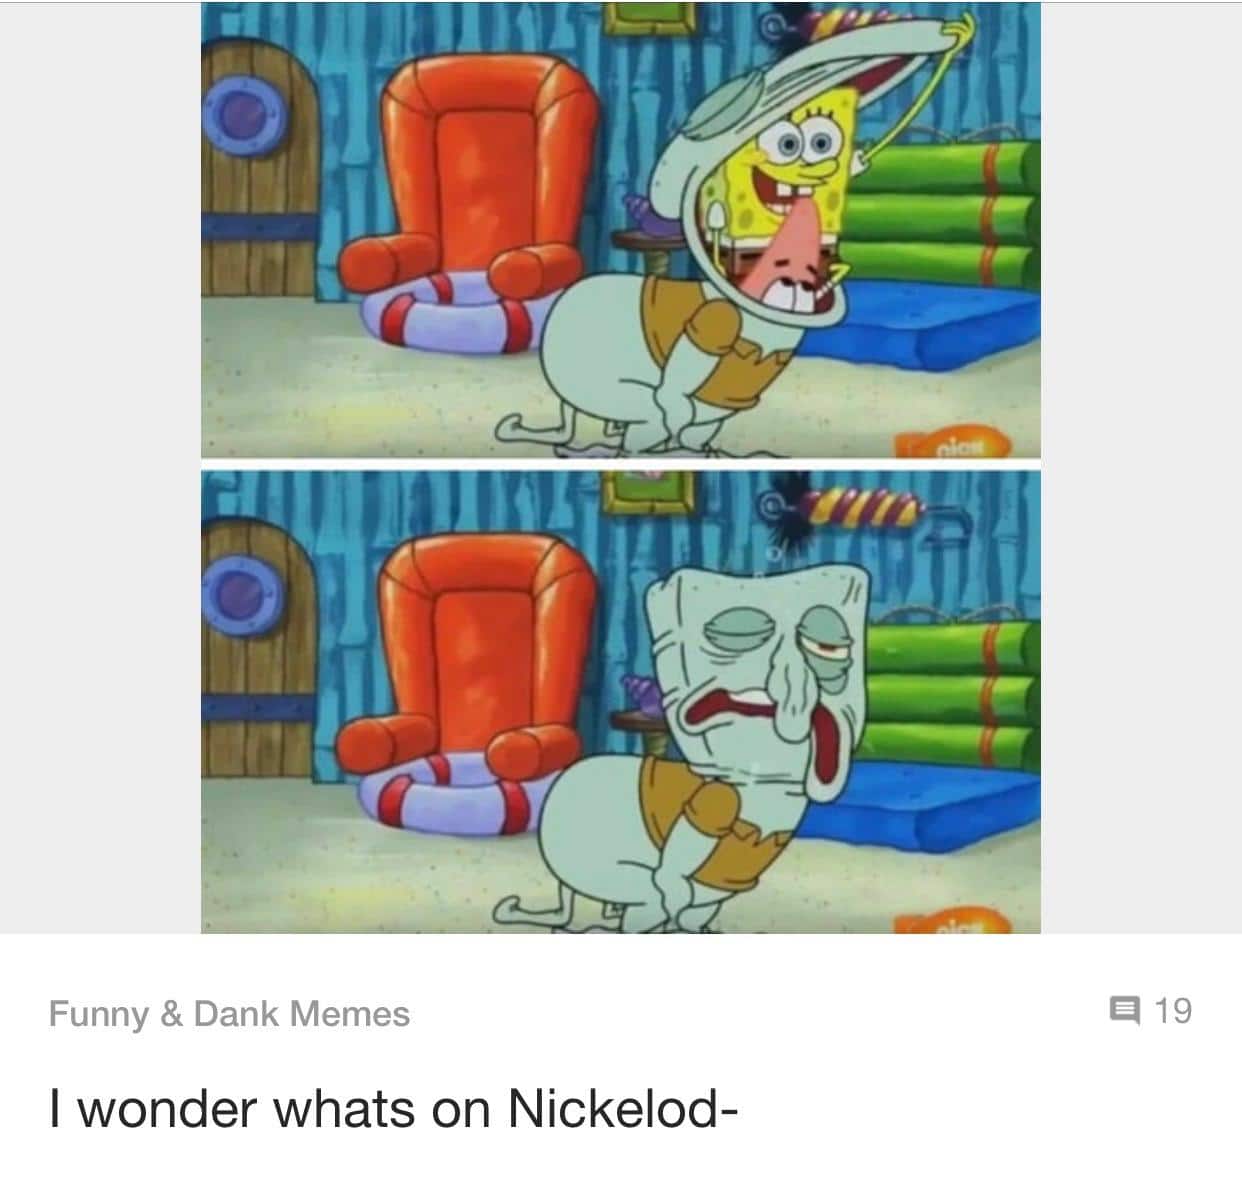 Spongebob, Squidward, Spongebob Spongebob Memes Spongebob, Squidward, Spongebob text: Funny & Dank Memes I wonder whats on Nickelod- A 19 